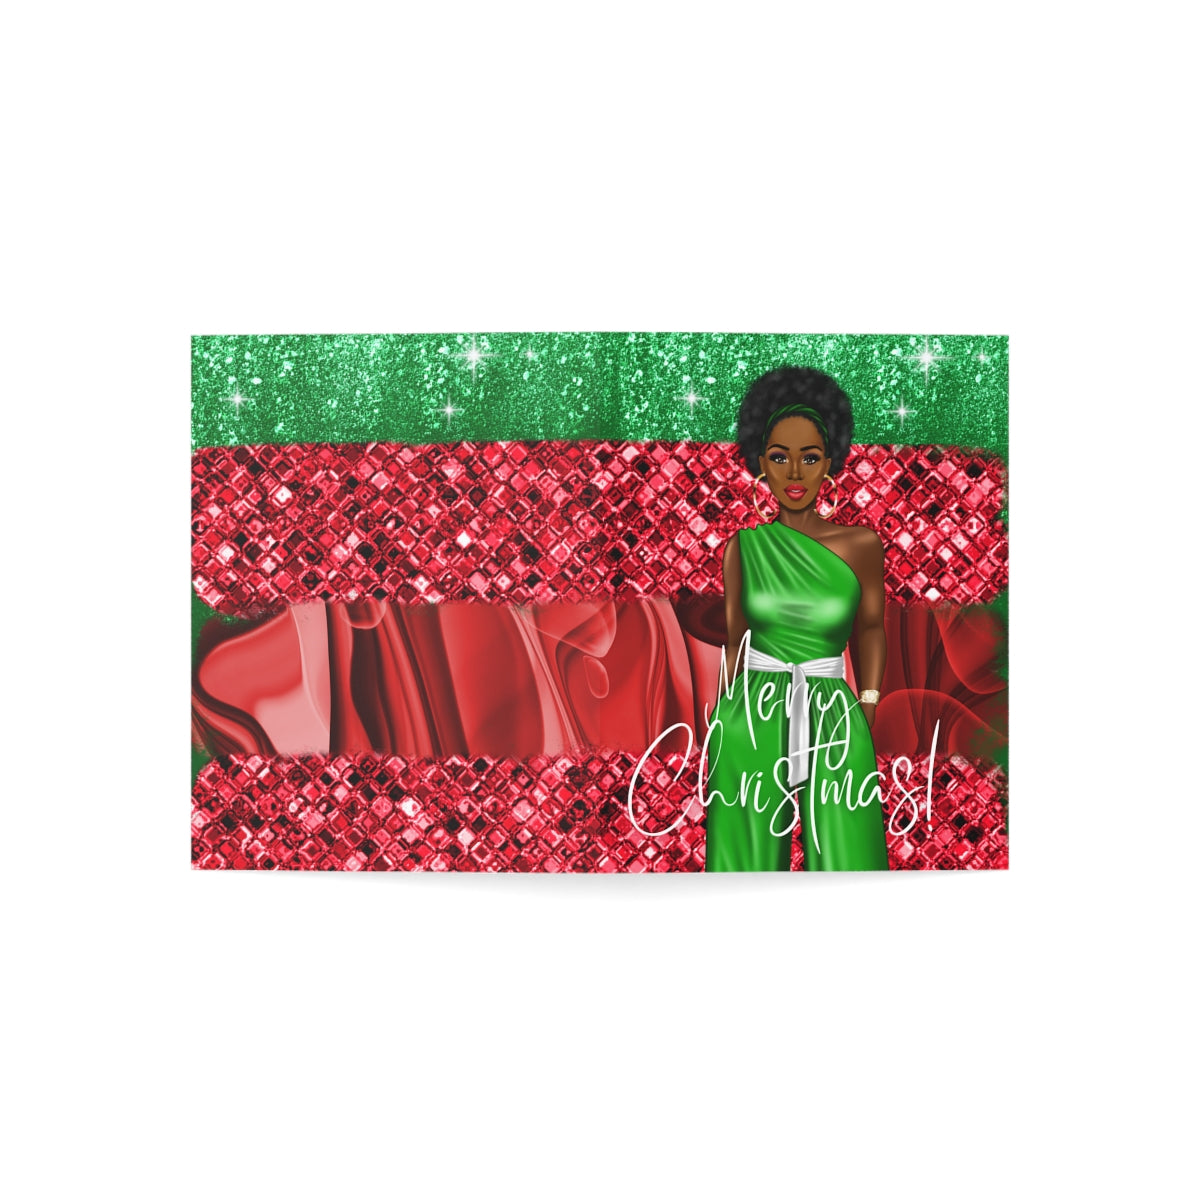 Black Woman Christmas Greeting Cards (1, 10, 30, and 50pcs)